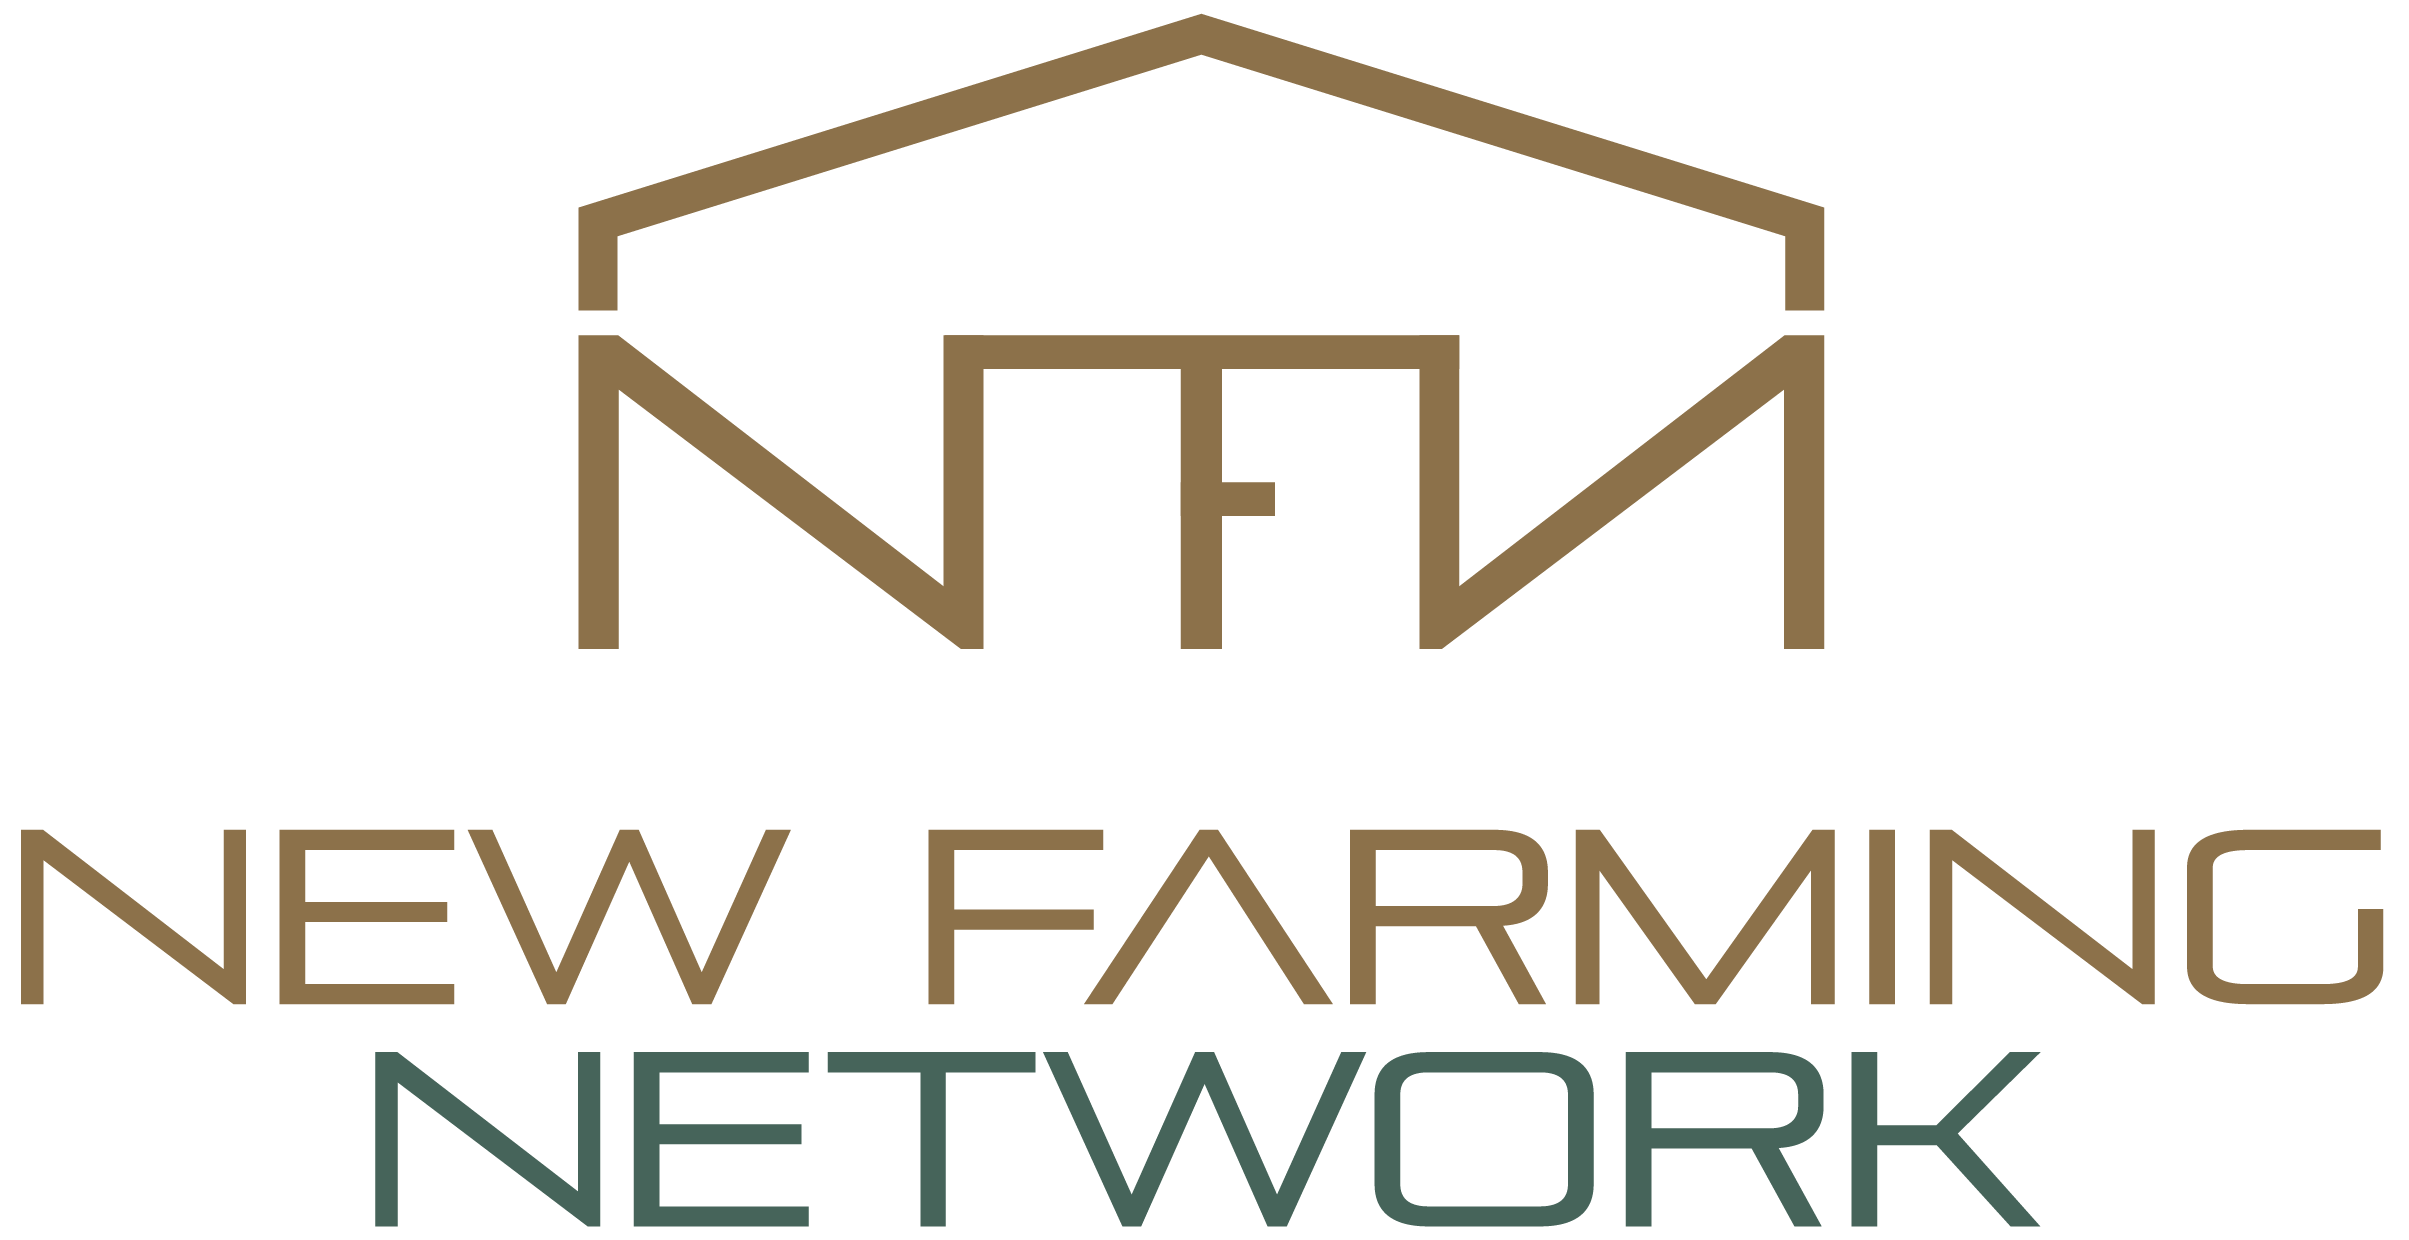 New Farming Network